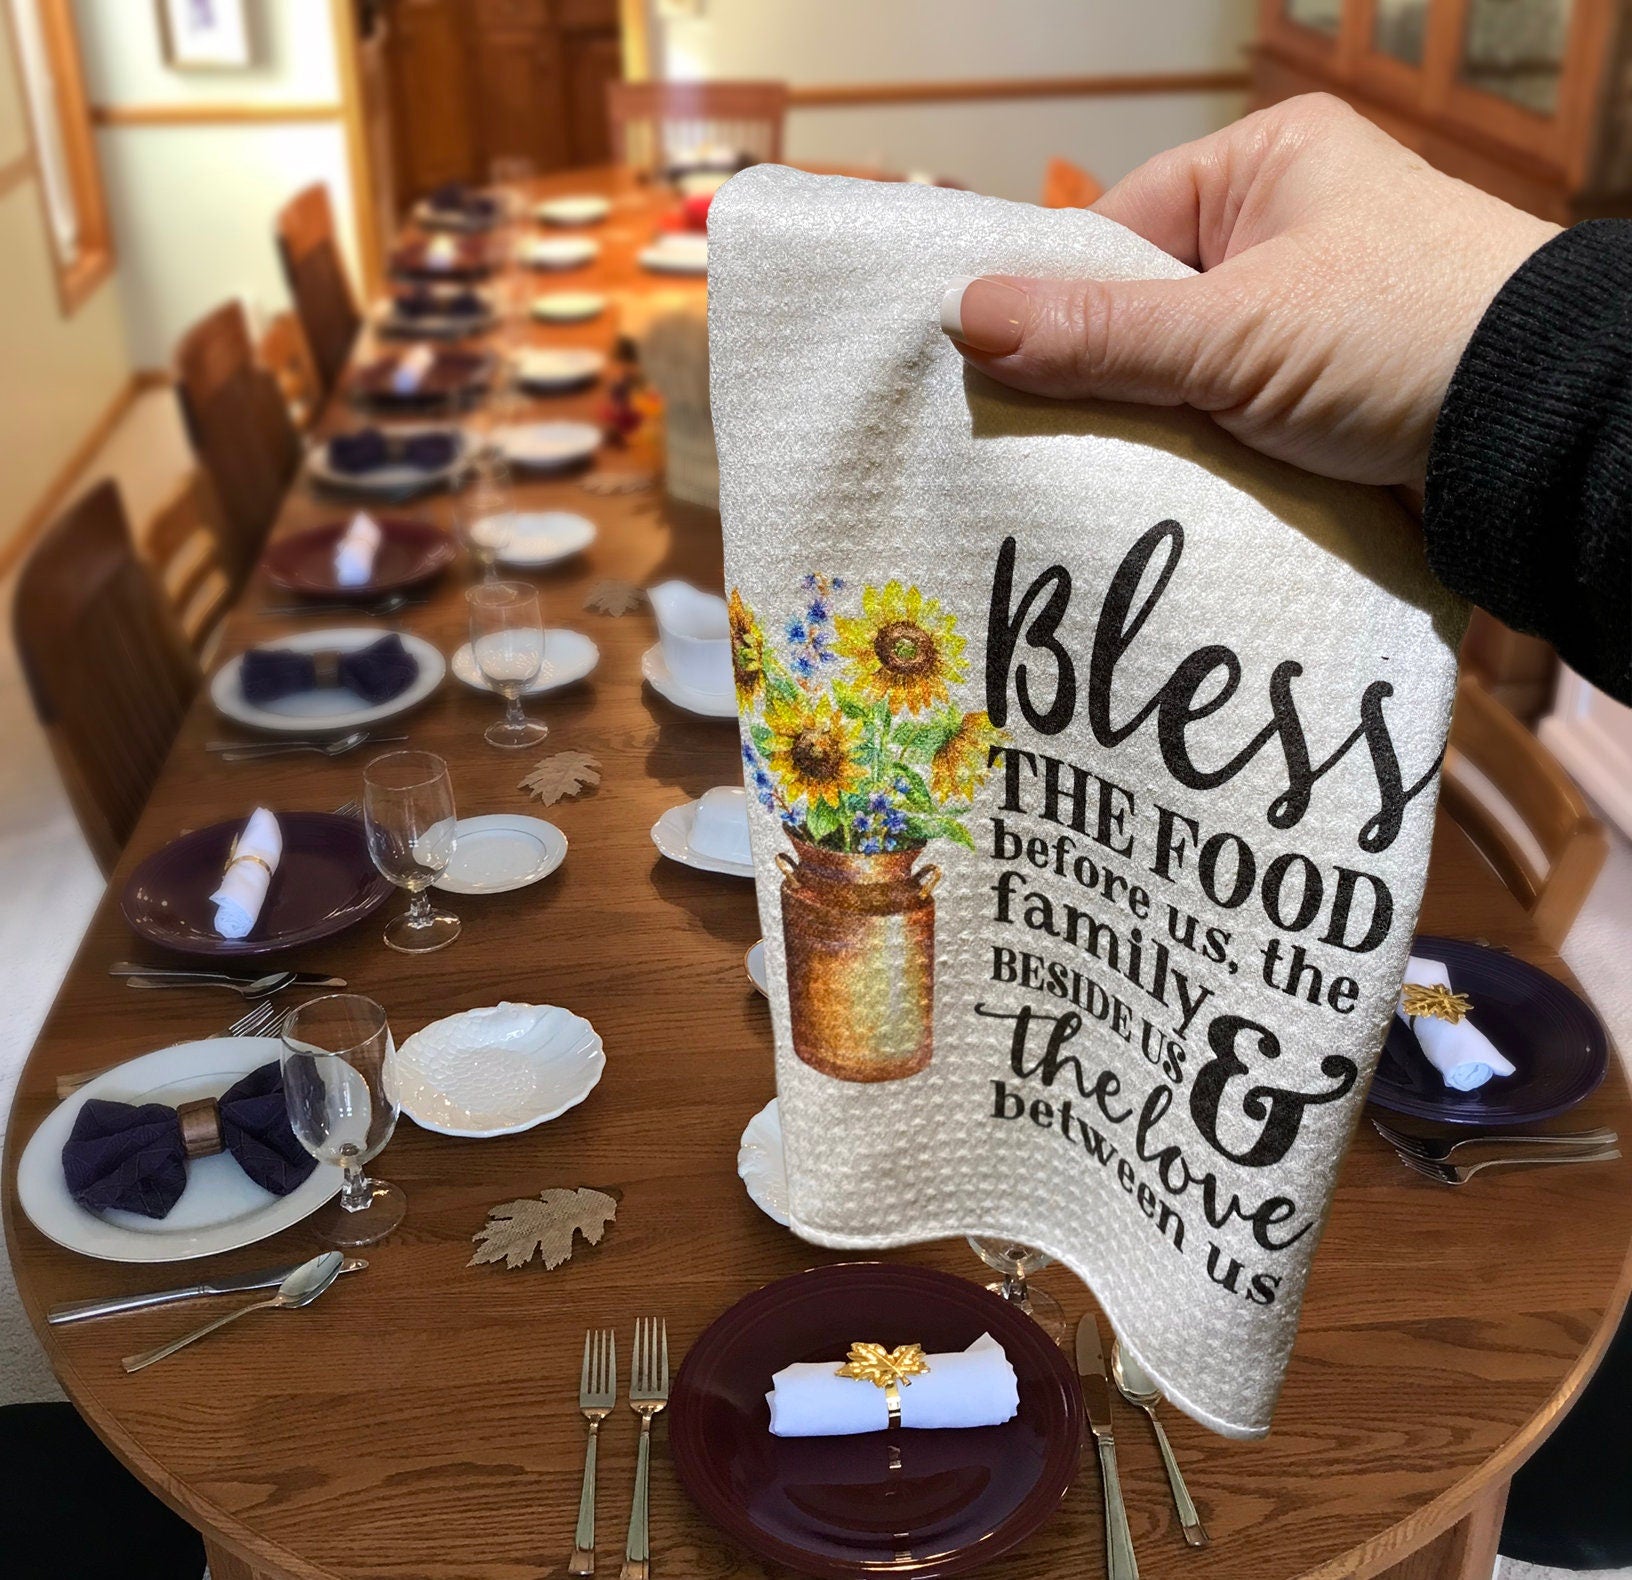 Bless the Food Before Us Dish Towel- Microfiber Tea Towel